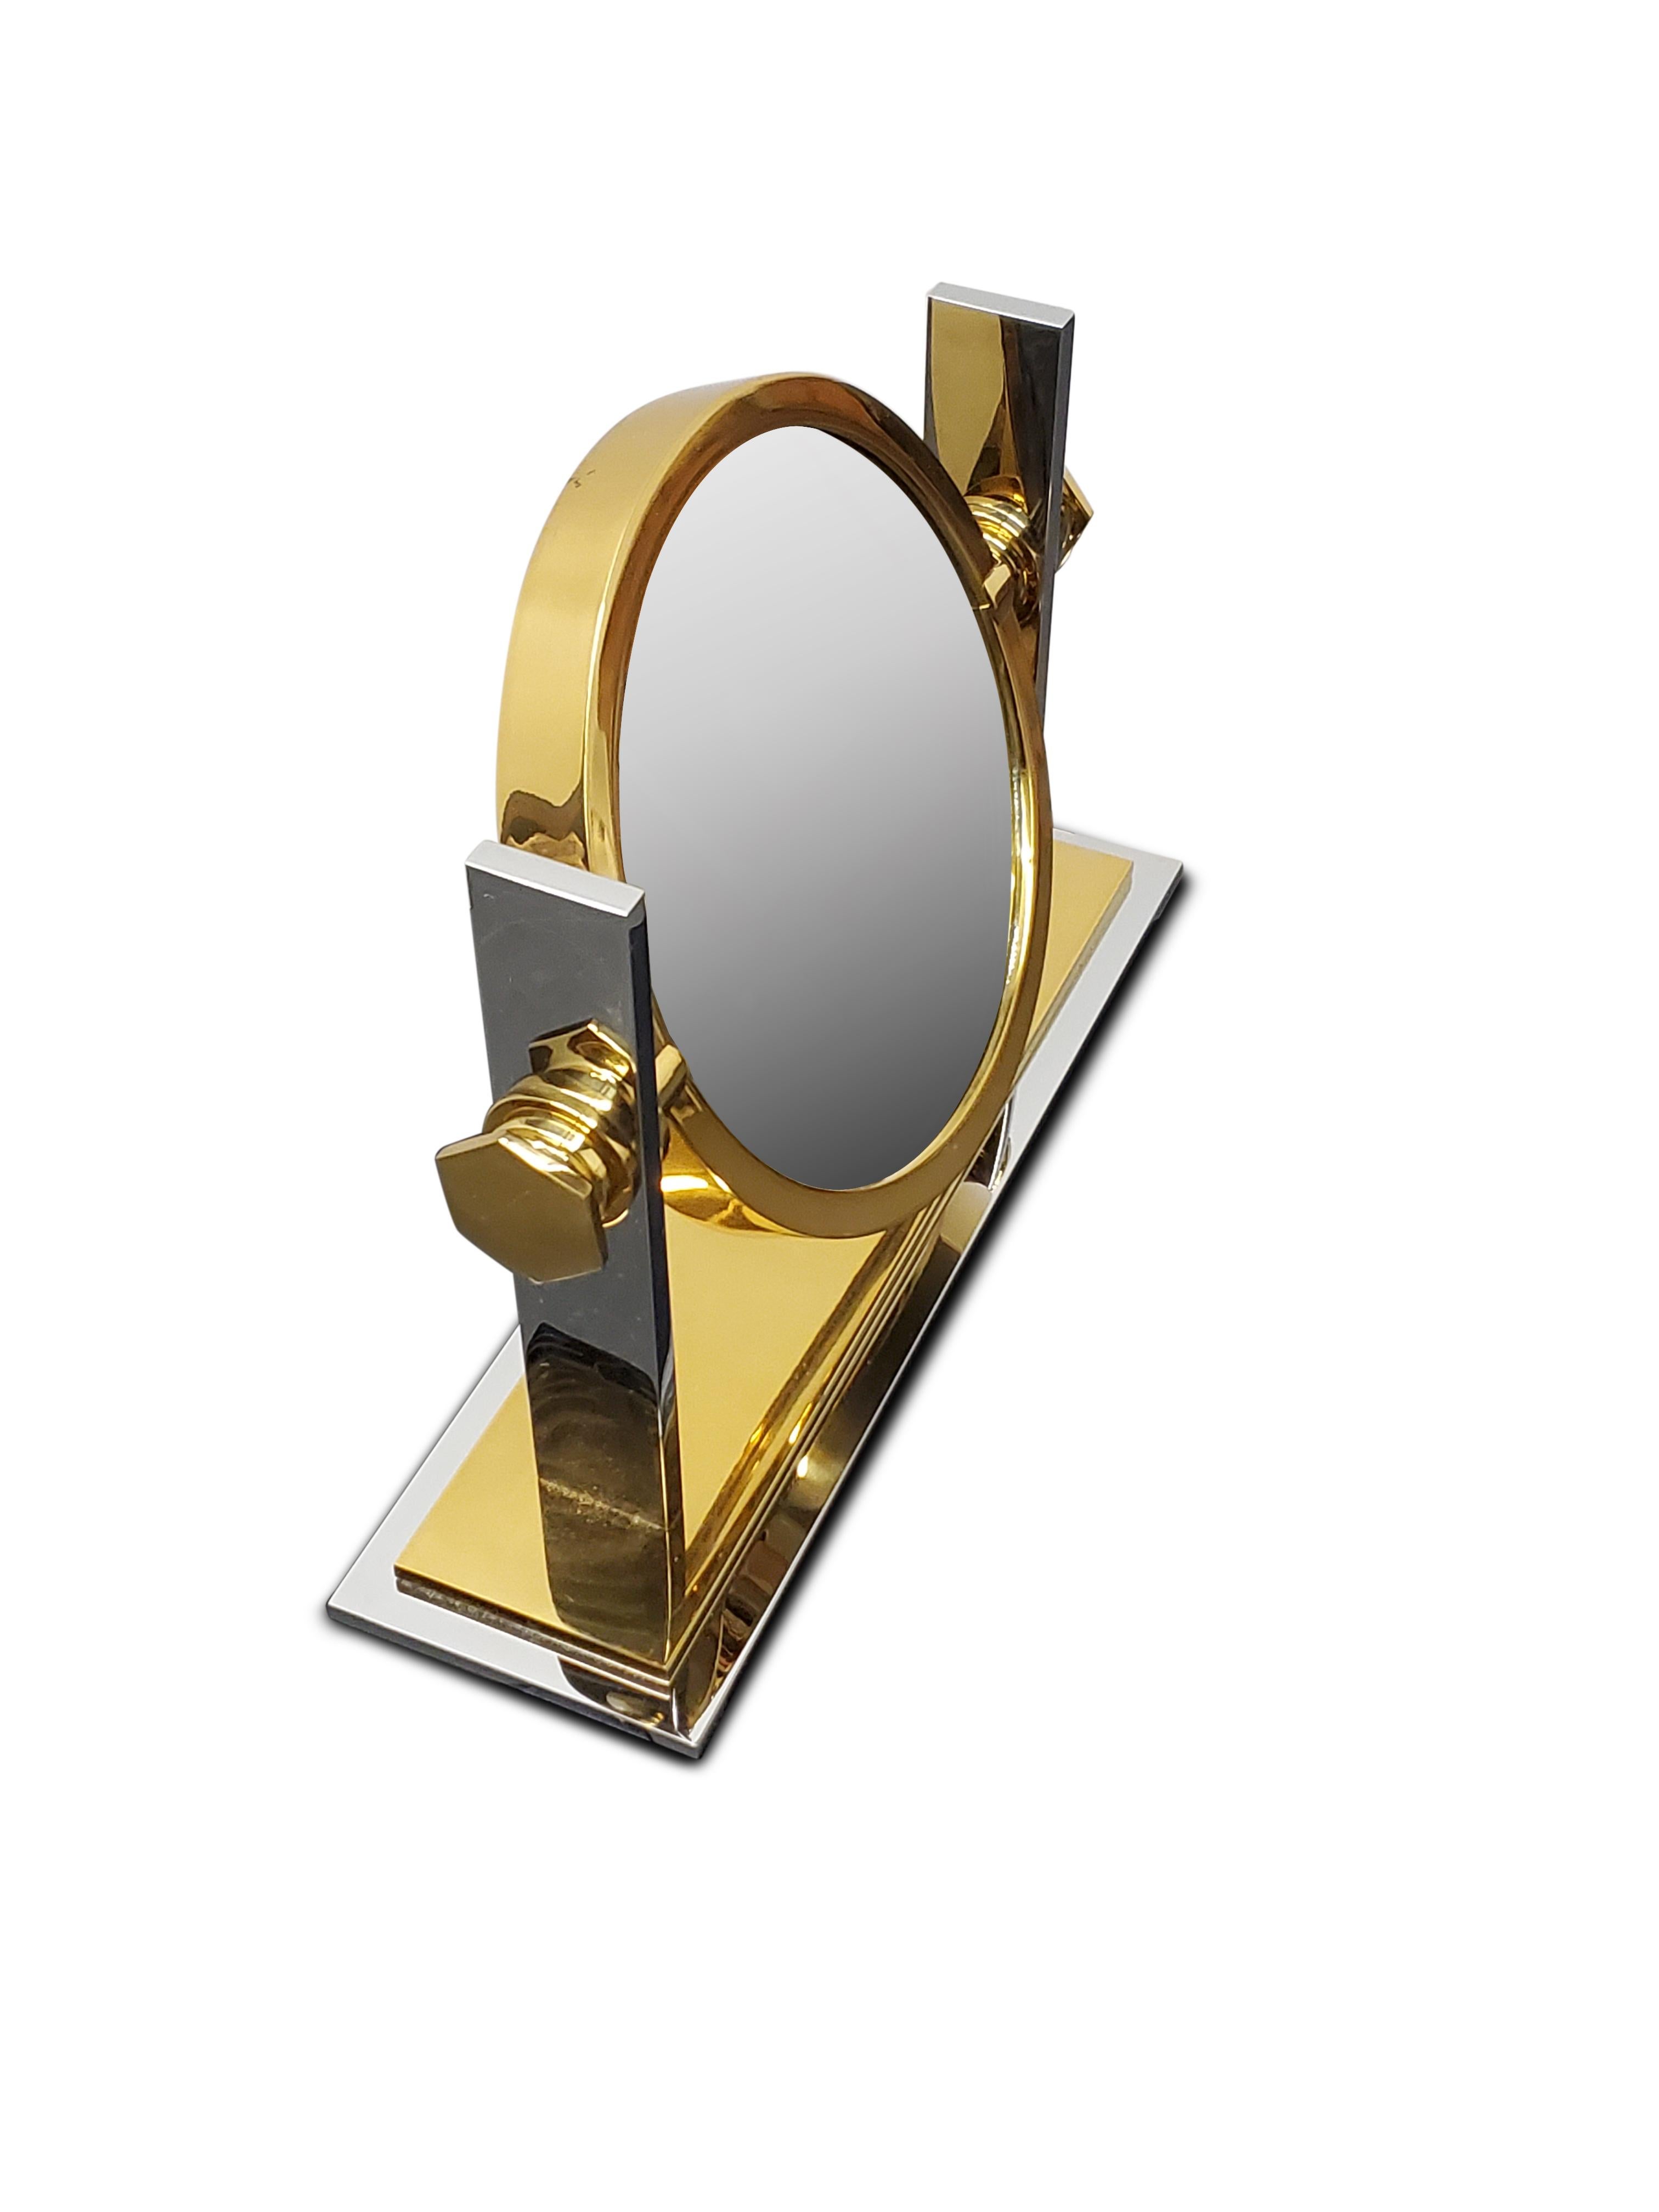 20th Century Karl Springer Brass and Nickel Vanity Mirror For Sale